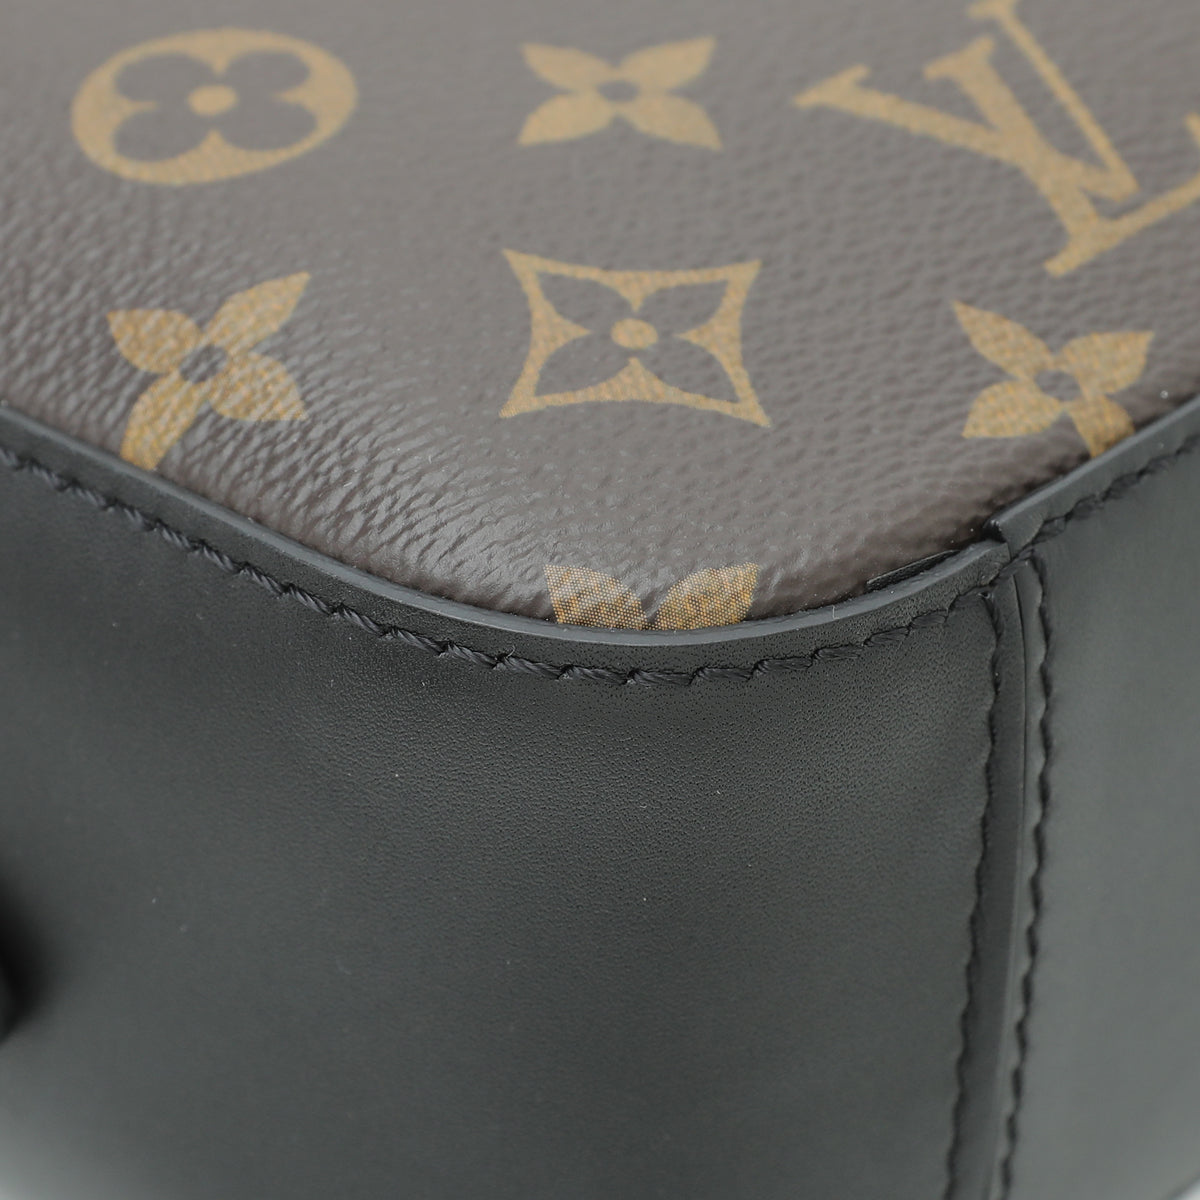 Saintonge Monogram – Keeks Designer Handbags